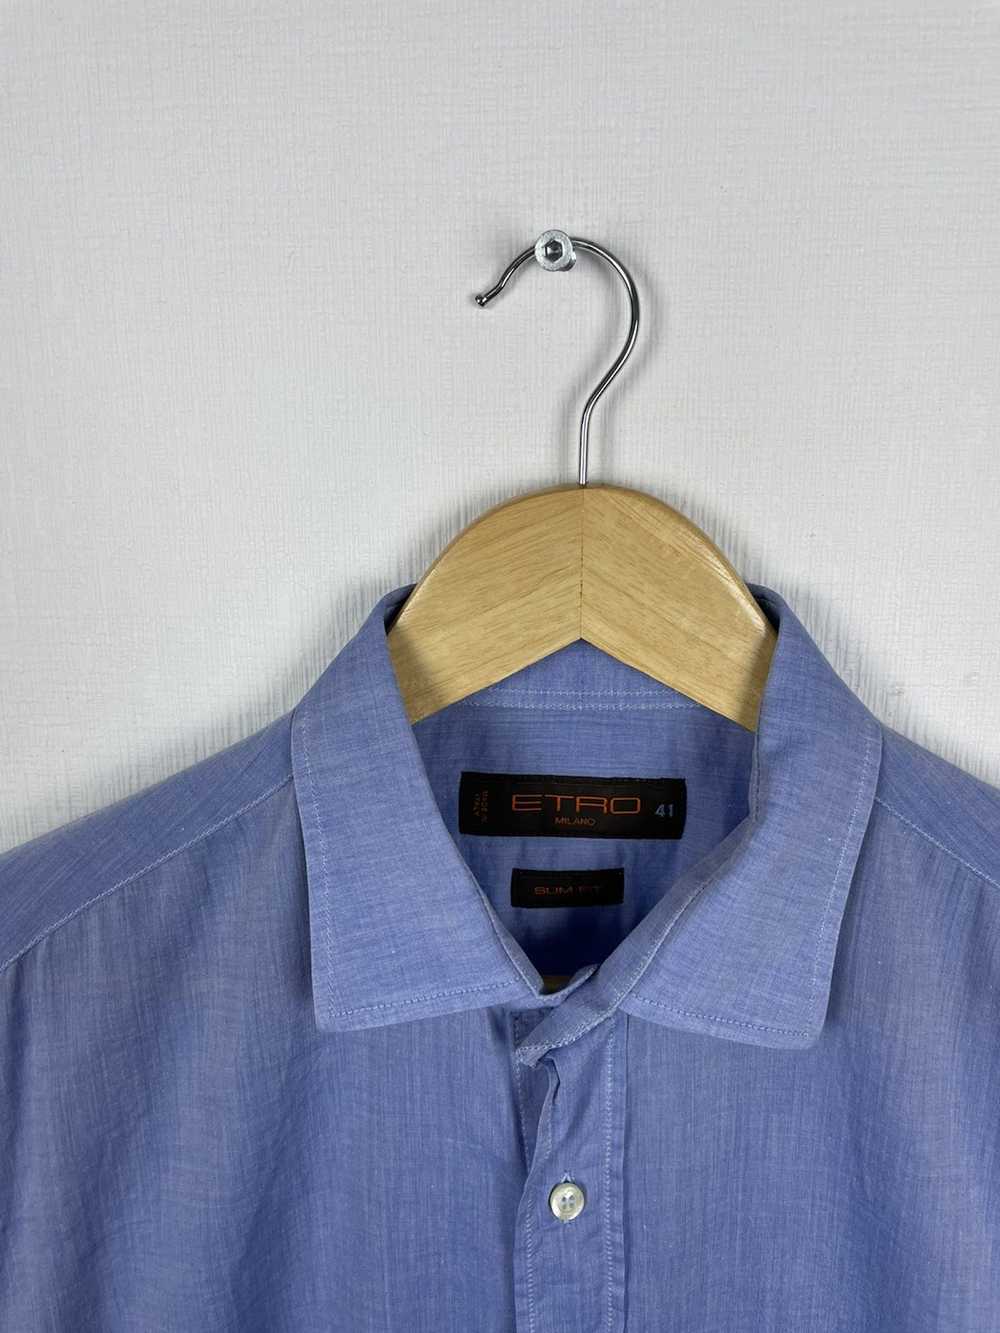 Etro Etro milano Men Shirt Button up size 41-L - image 2